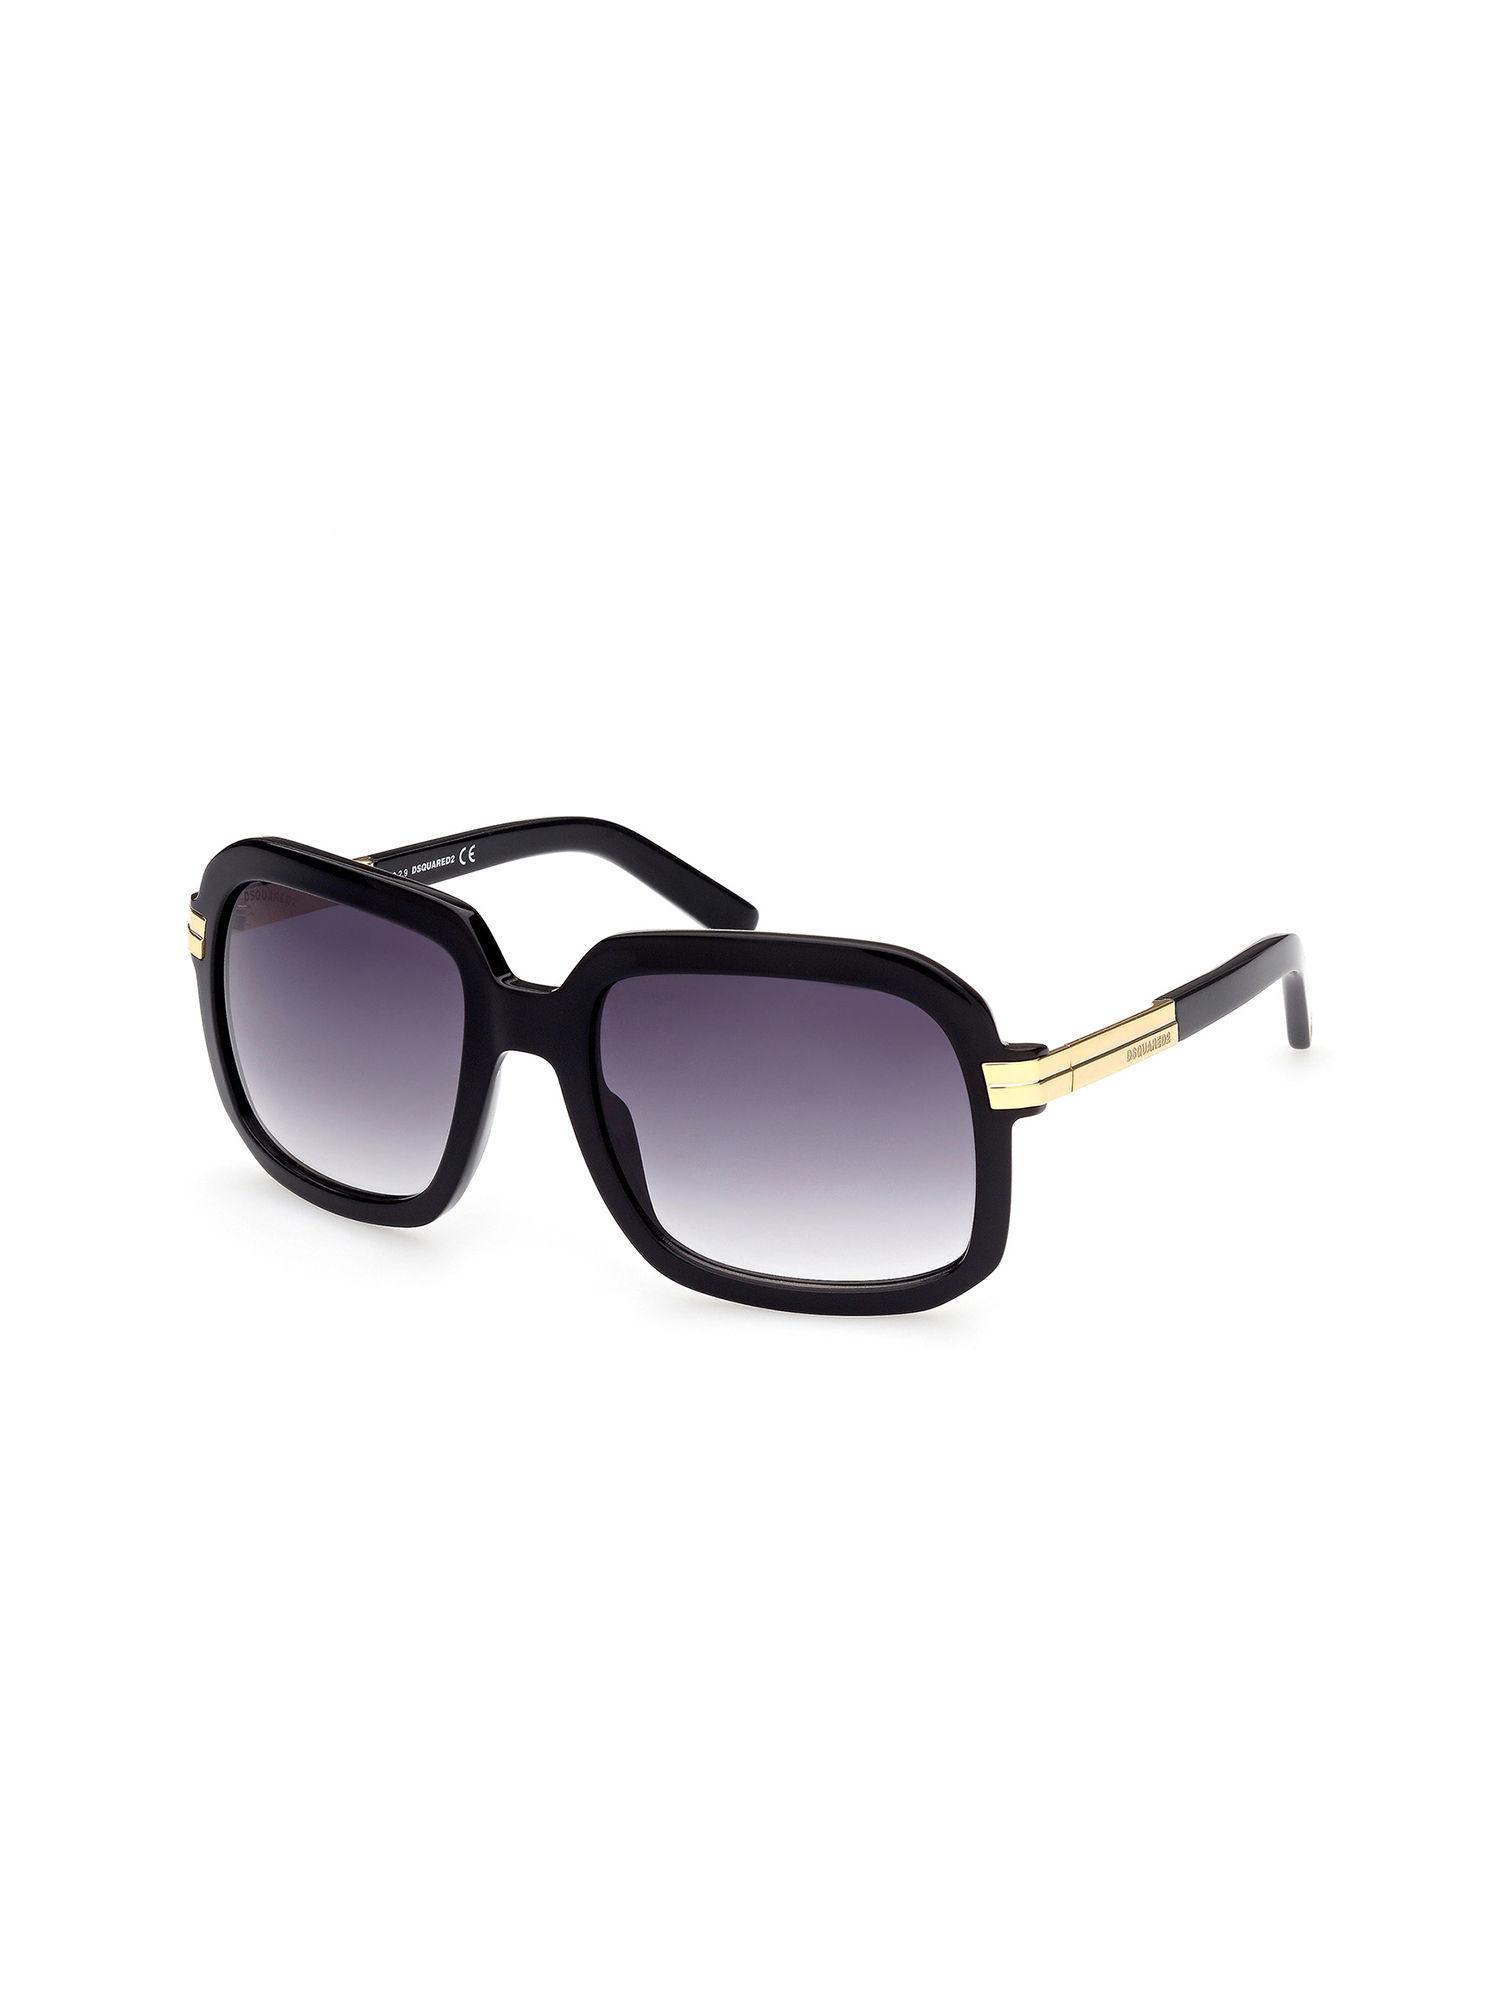 black plastic sunglasses dq0351 57 01b